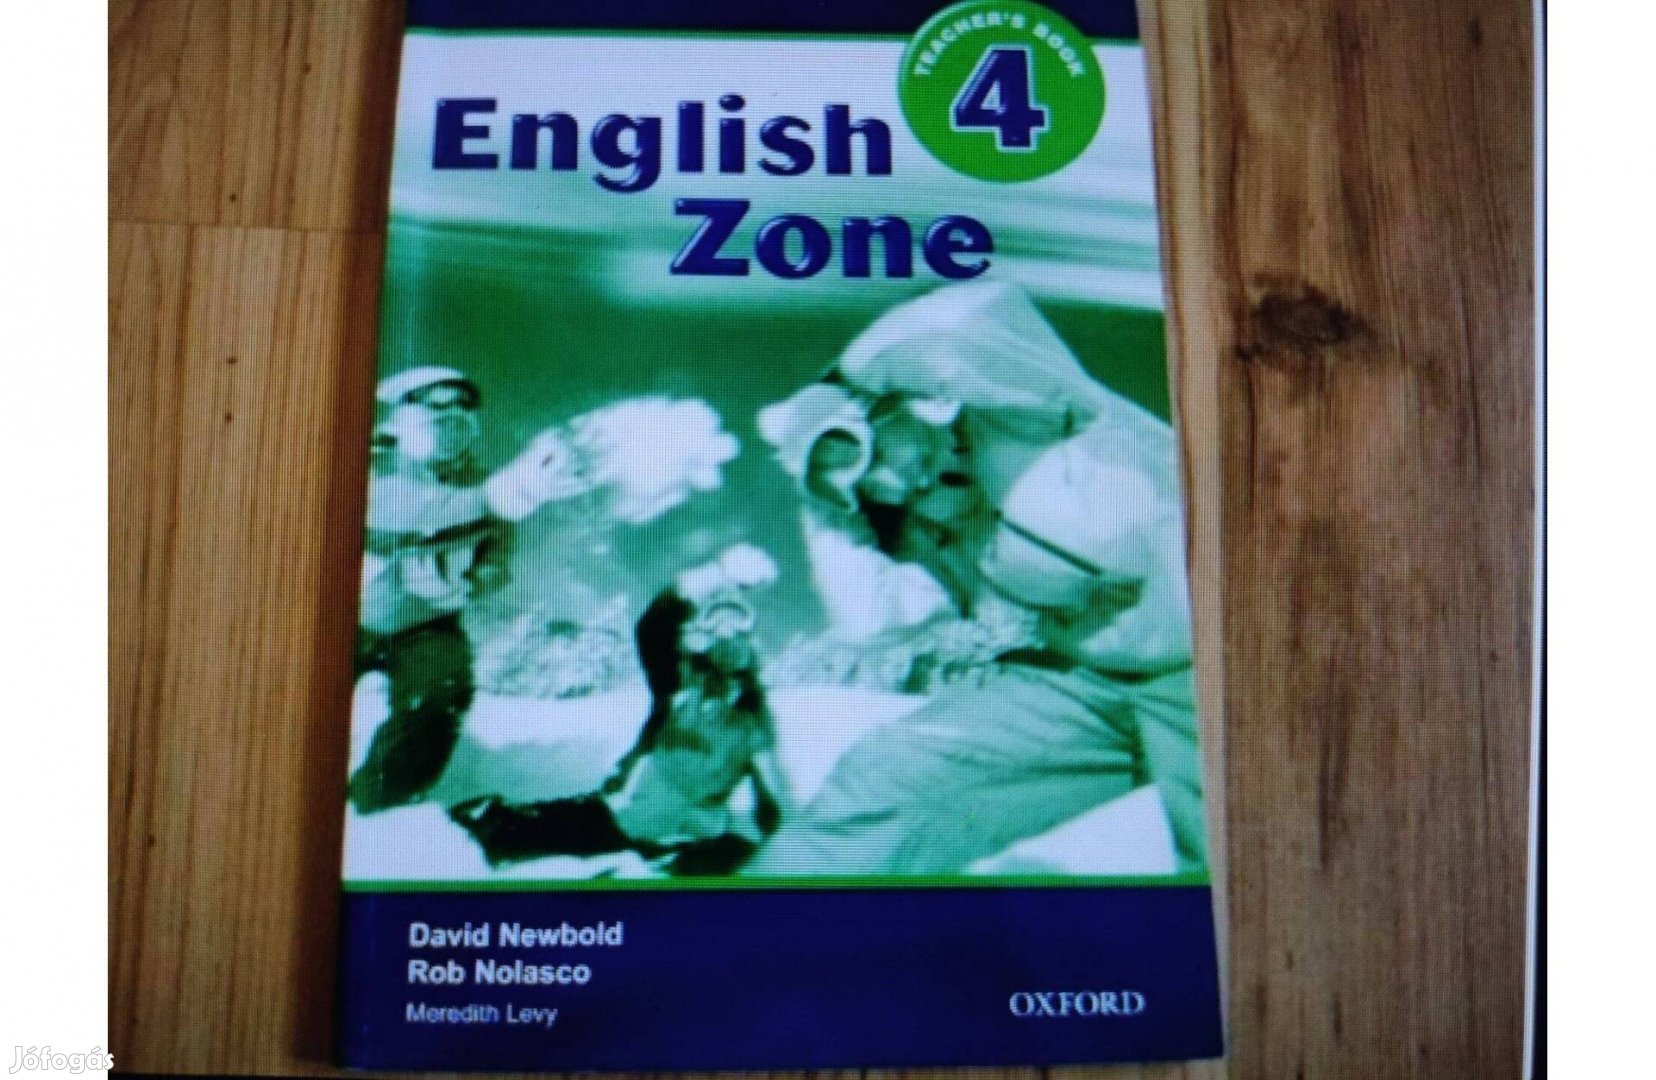 English Zone 4, tanári kézikönyv - postázom is